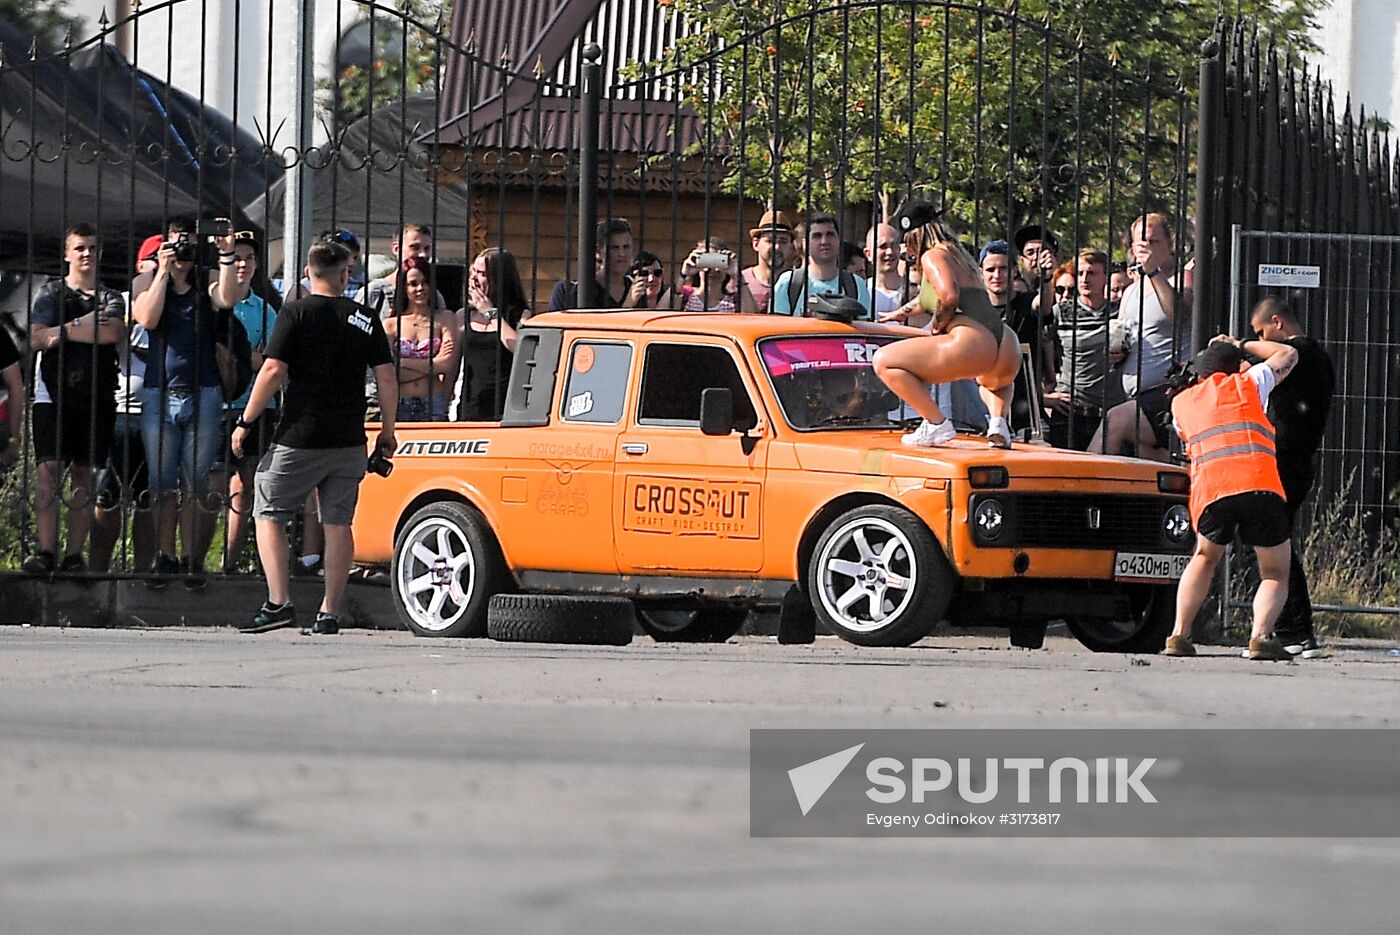 Second Russian nationwide Zhiguli car festival, Zhi-Fest